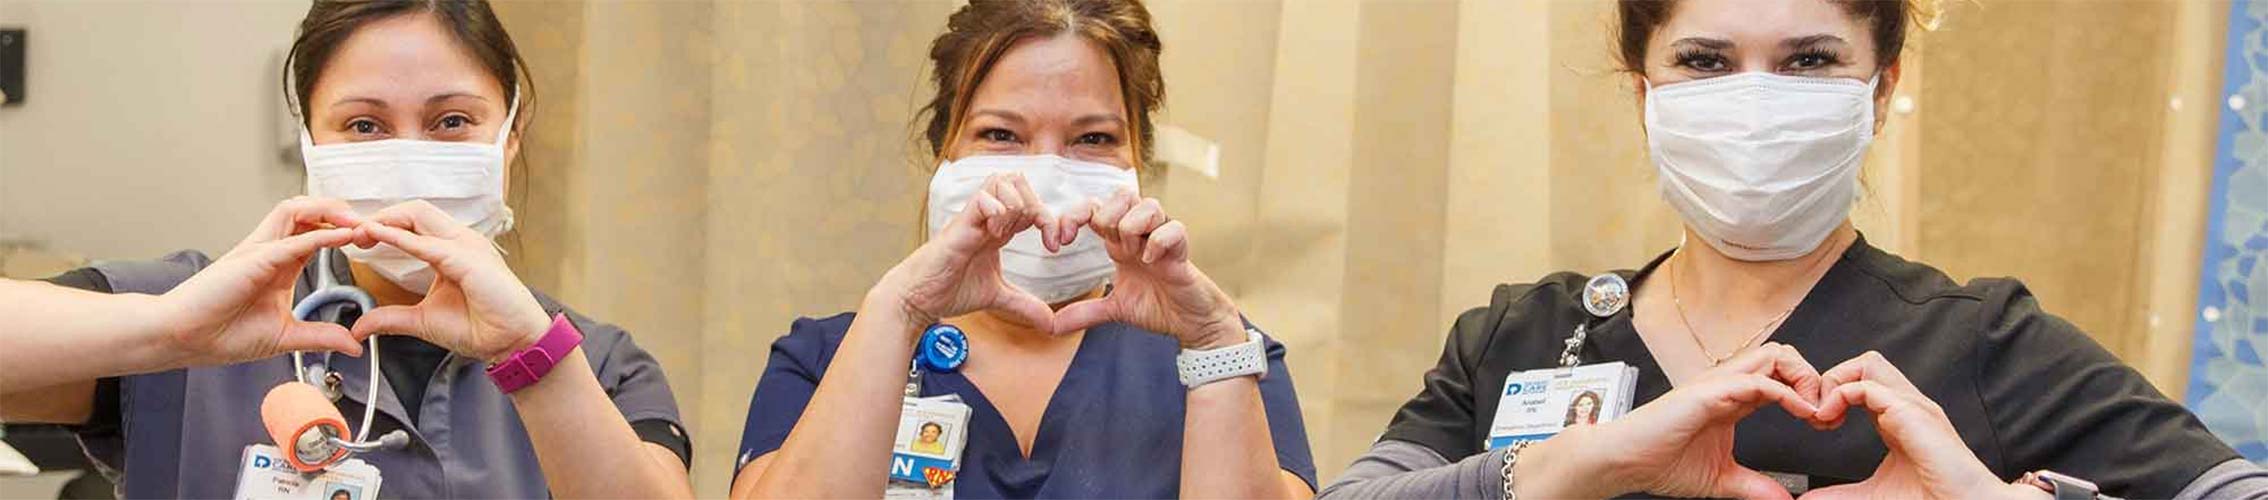 nurses with heart hands